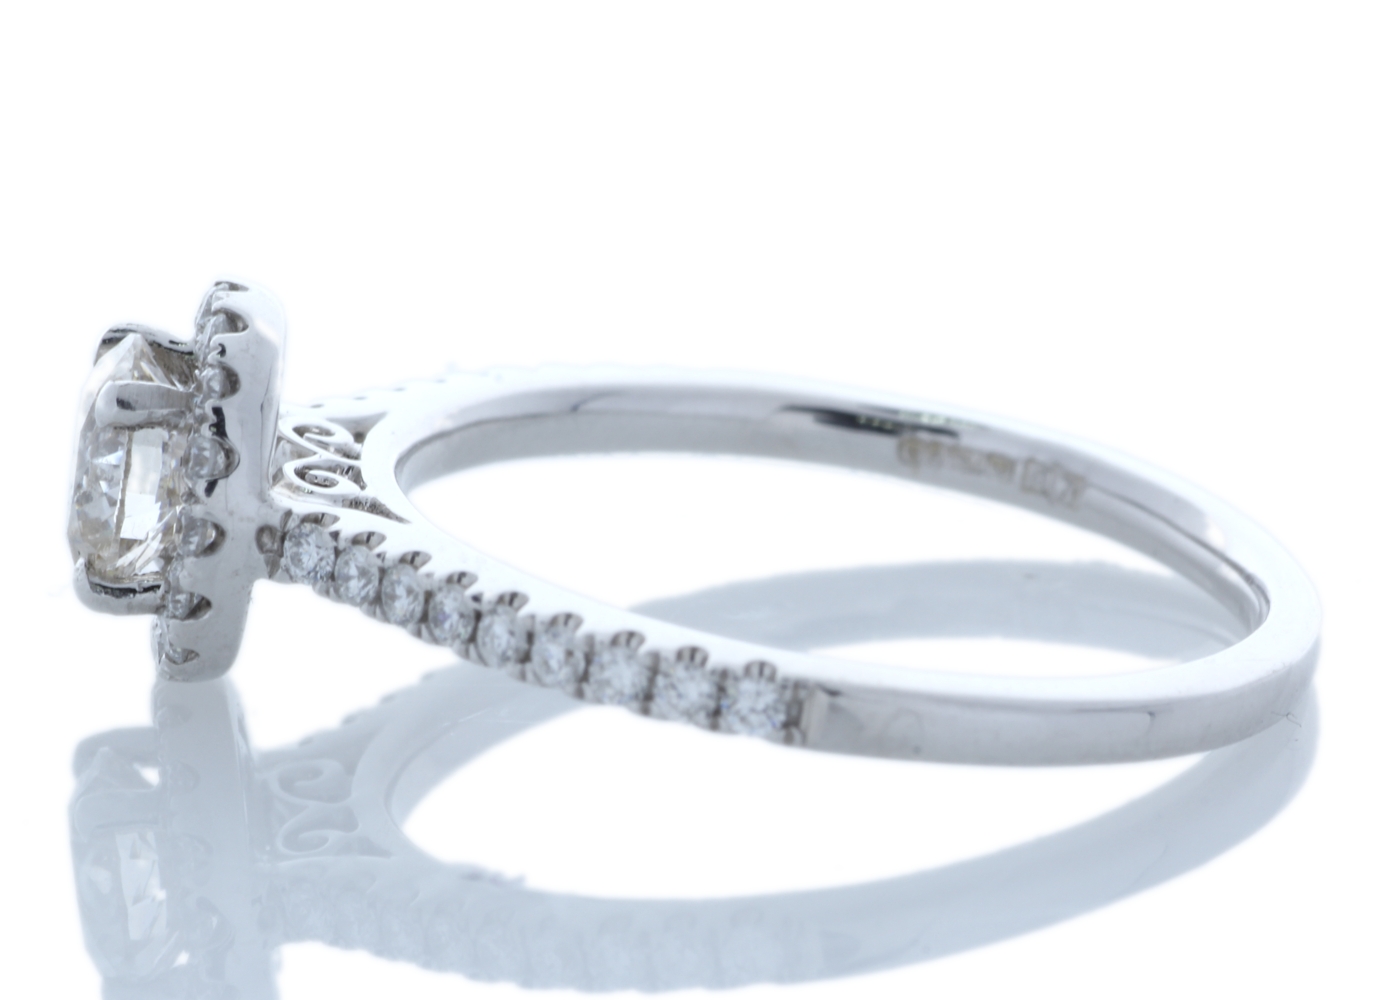 18ct White Gold Halo Set Diamond Ring 0.74 Carats - Image 3 of 6